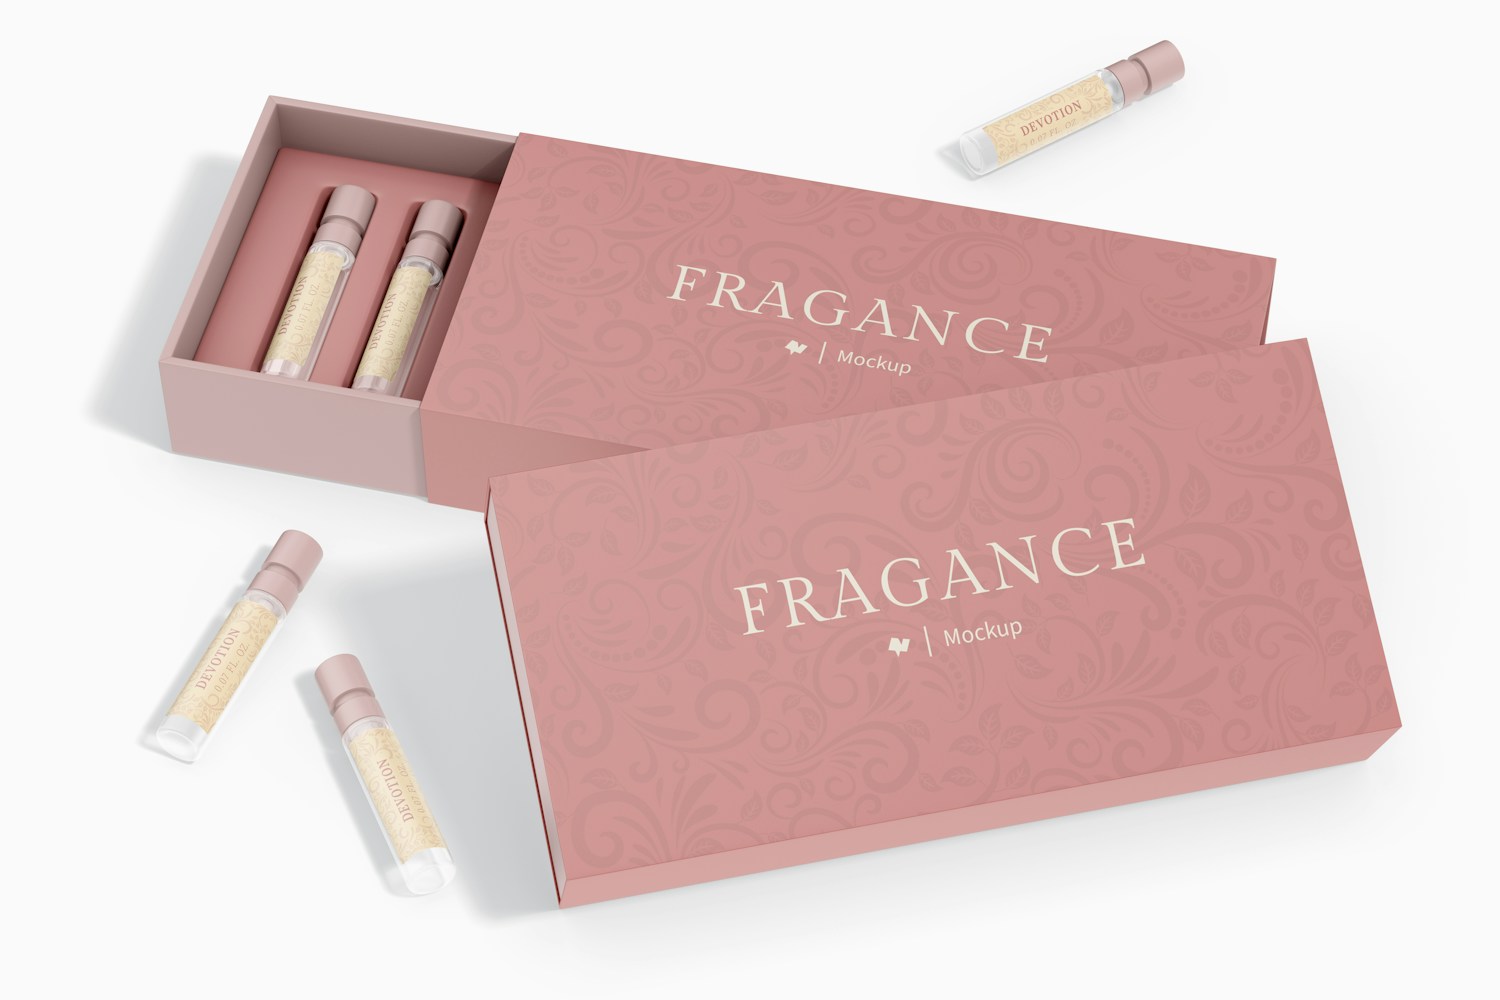 Fragrance Sample Boxes Mockup, Perspective